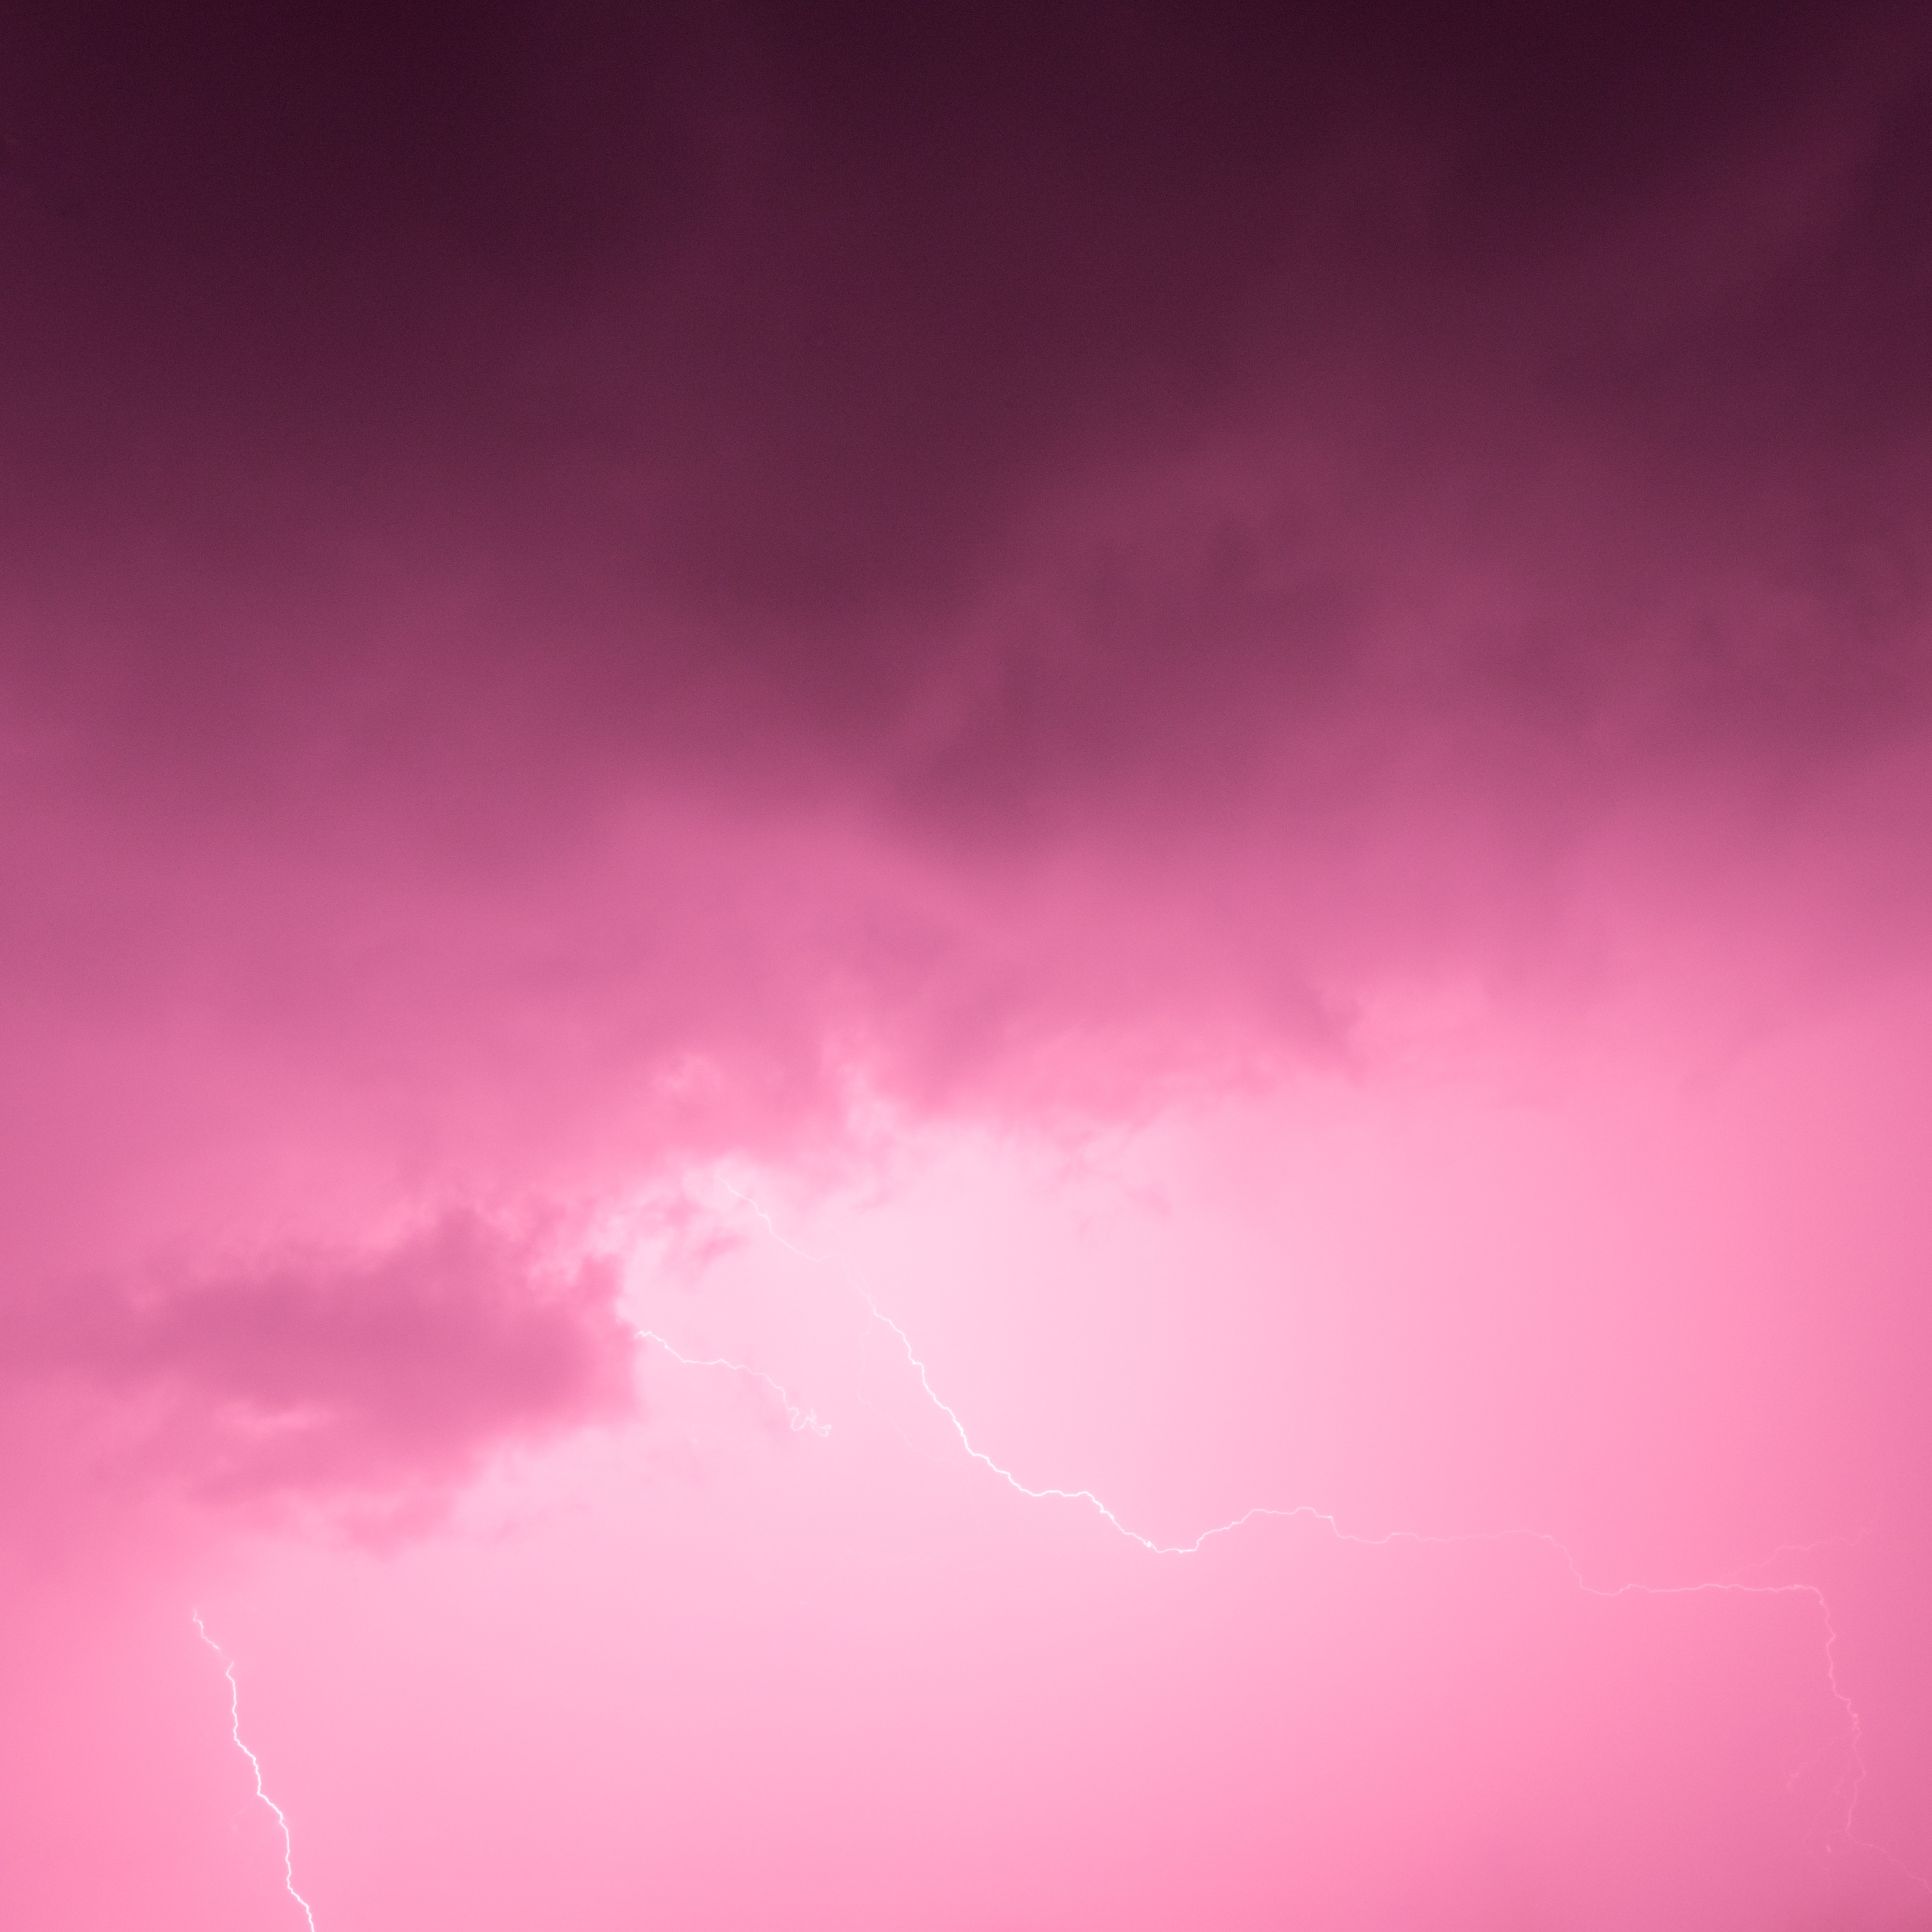 4000x4000 nature, geneva, angry, cloud, weather, sky, evening, suisse, anger, Creative Commons image, lightning, storm, wetter, schweiz, meteo, night, switzerland, pink, bolt, unpredictable, outdoors Gallery HD Wallpaper